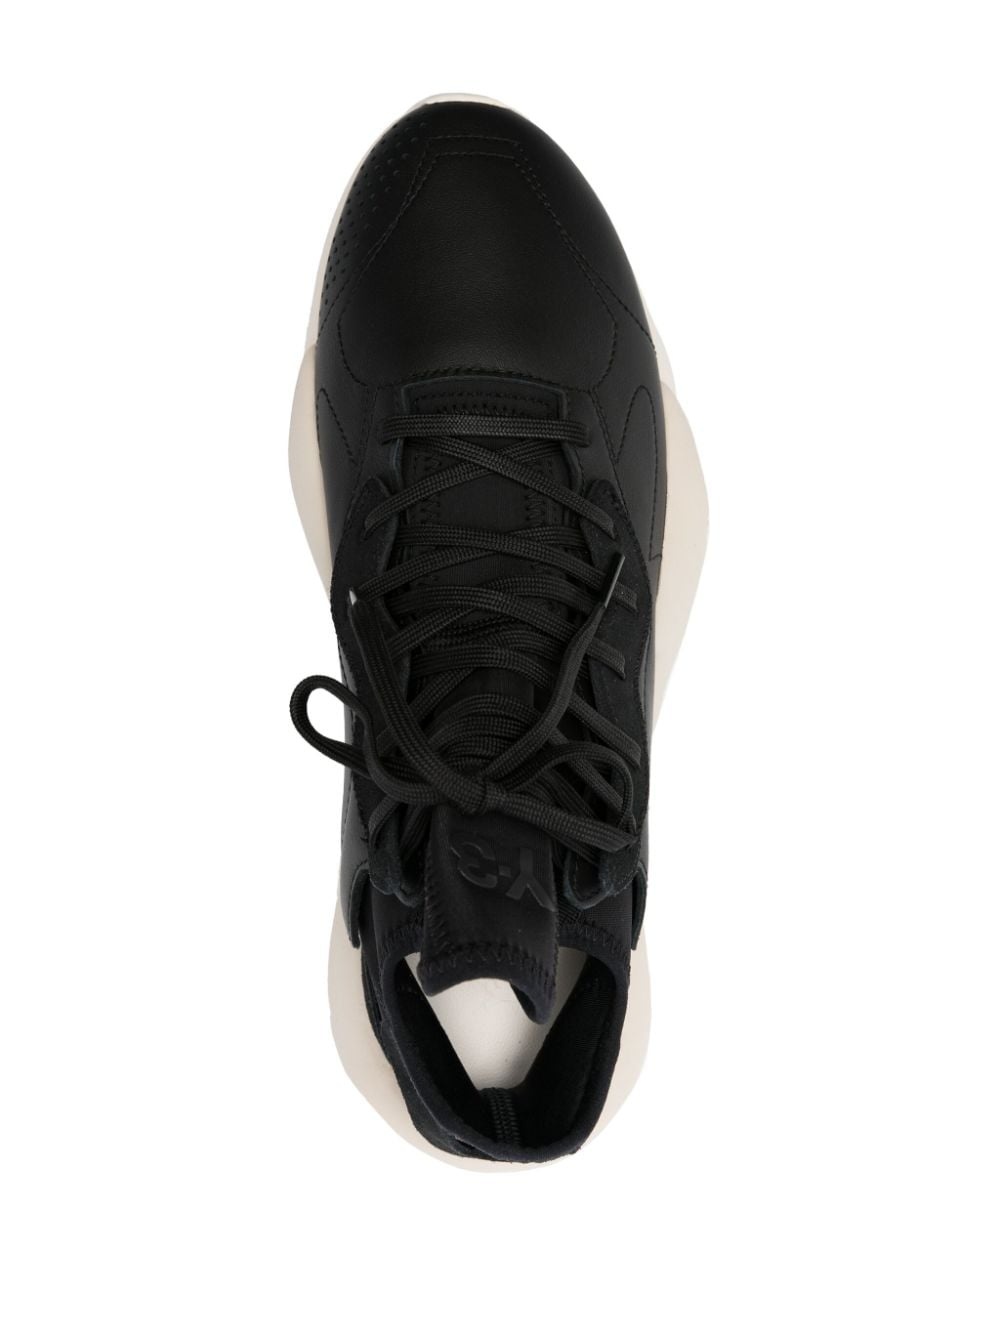 Kaiwa leather sneakers - 4